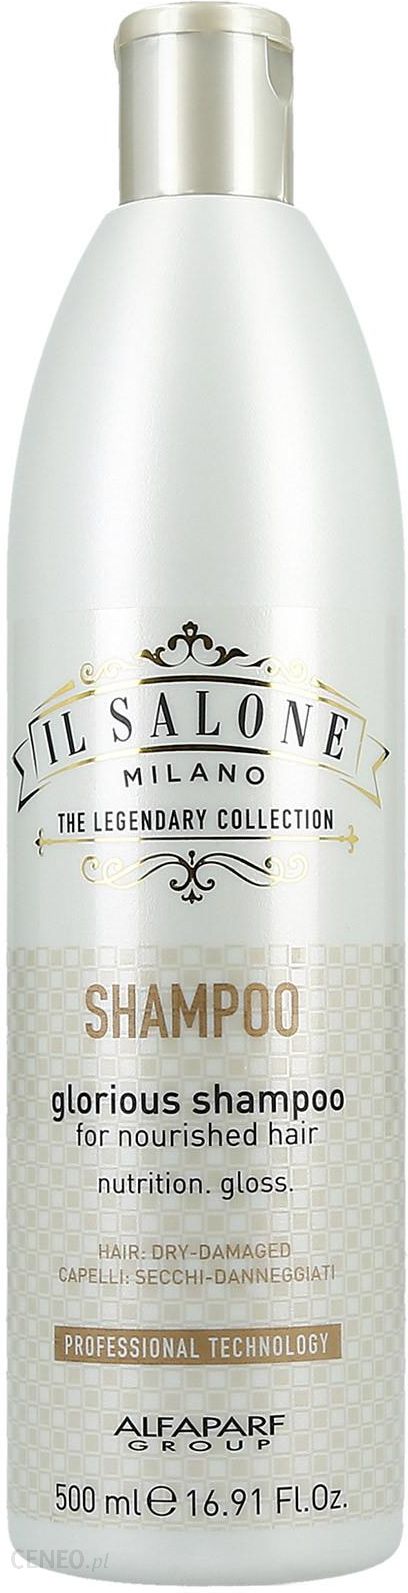 szampon slane milano ceneo